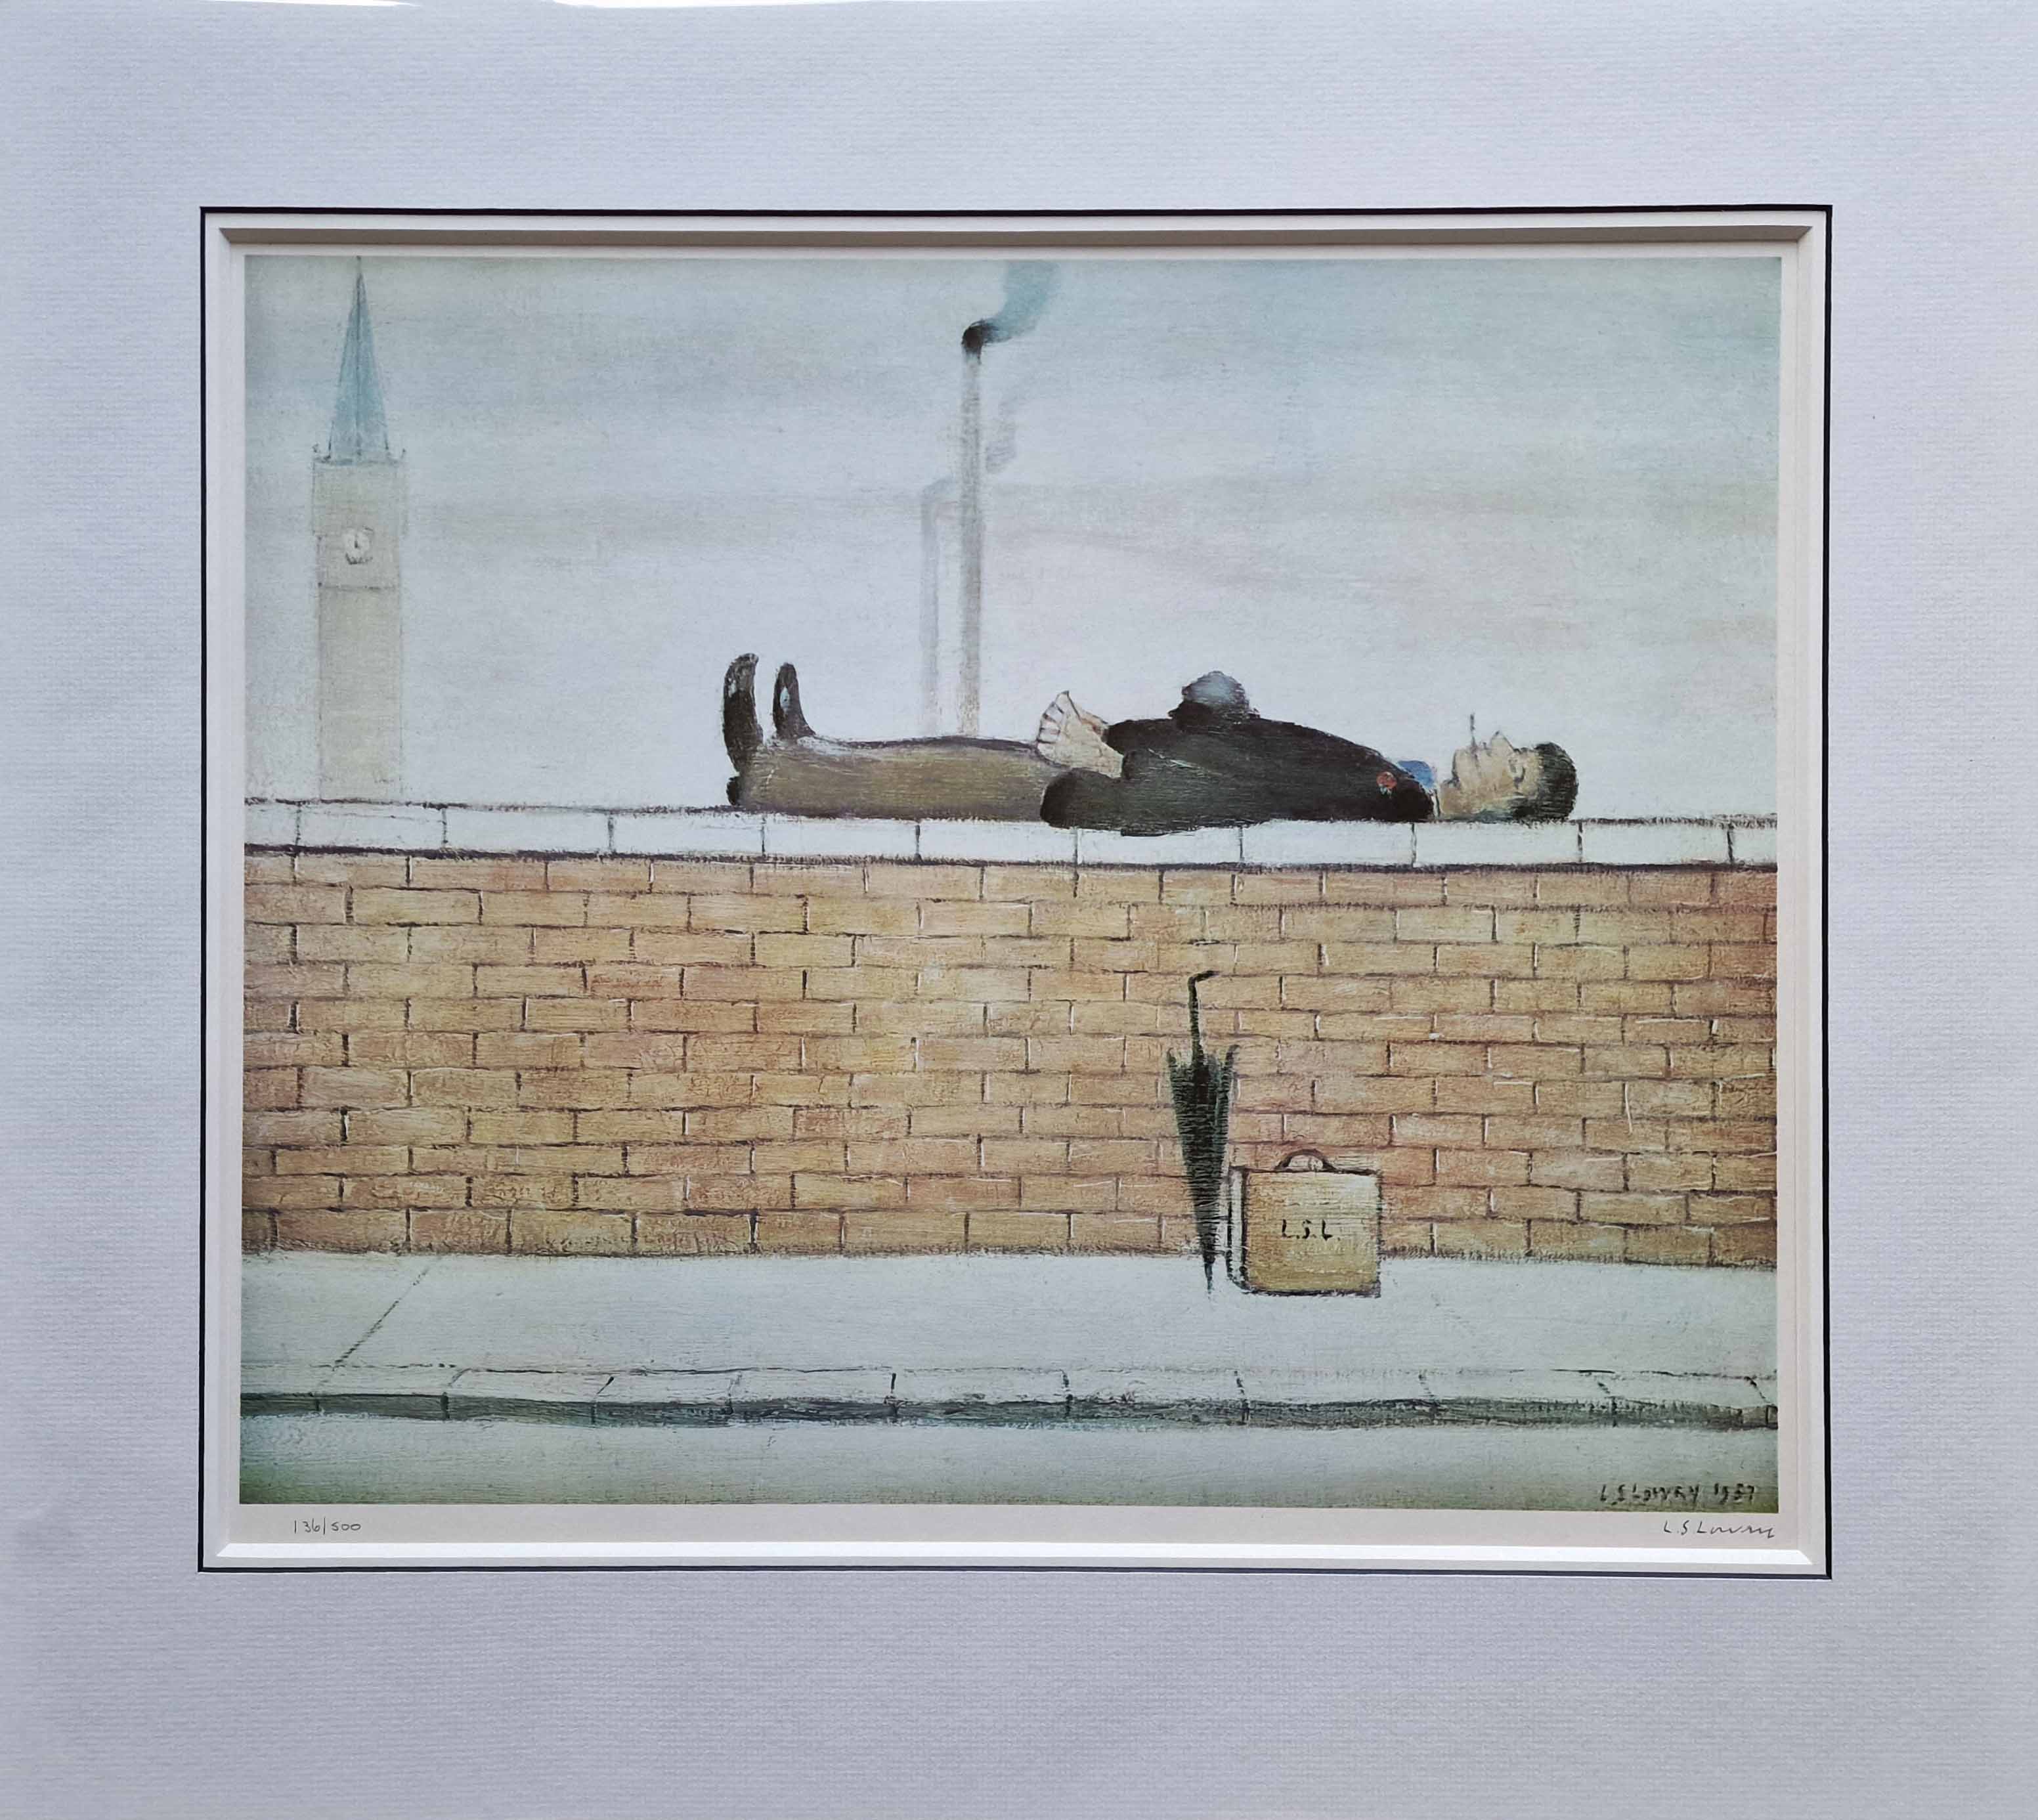 lowry, Man lying on a wall, signed print lslowry